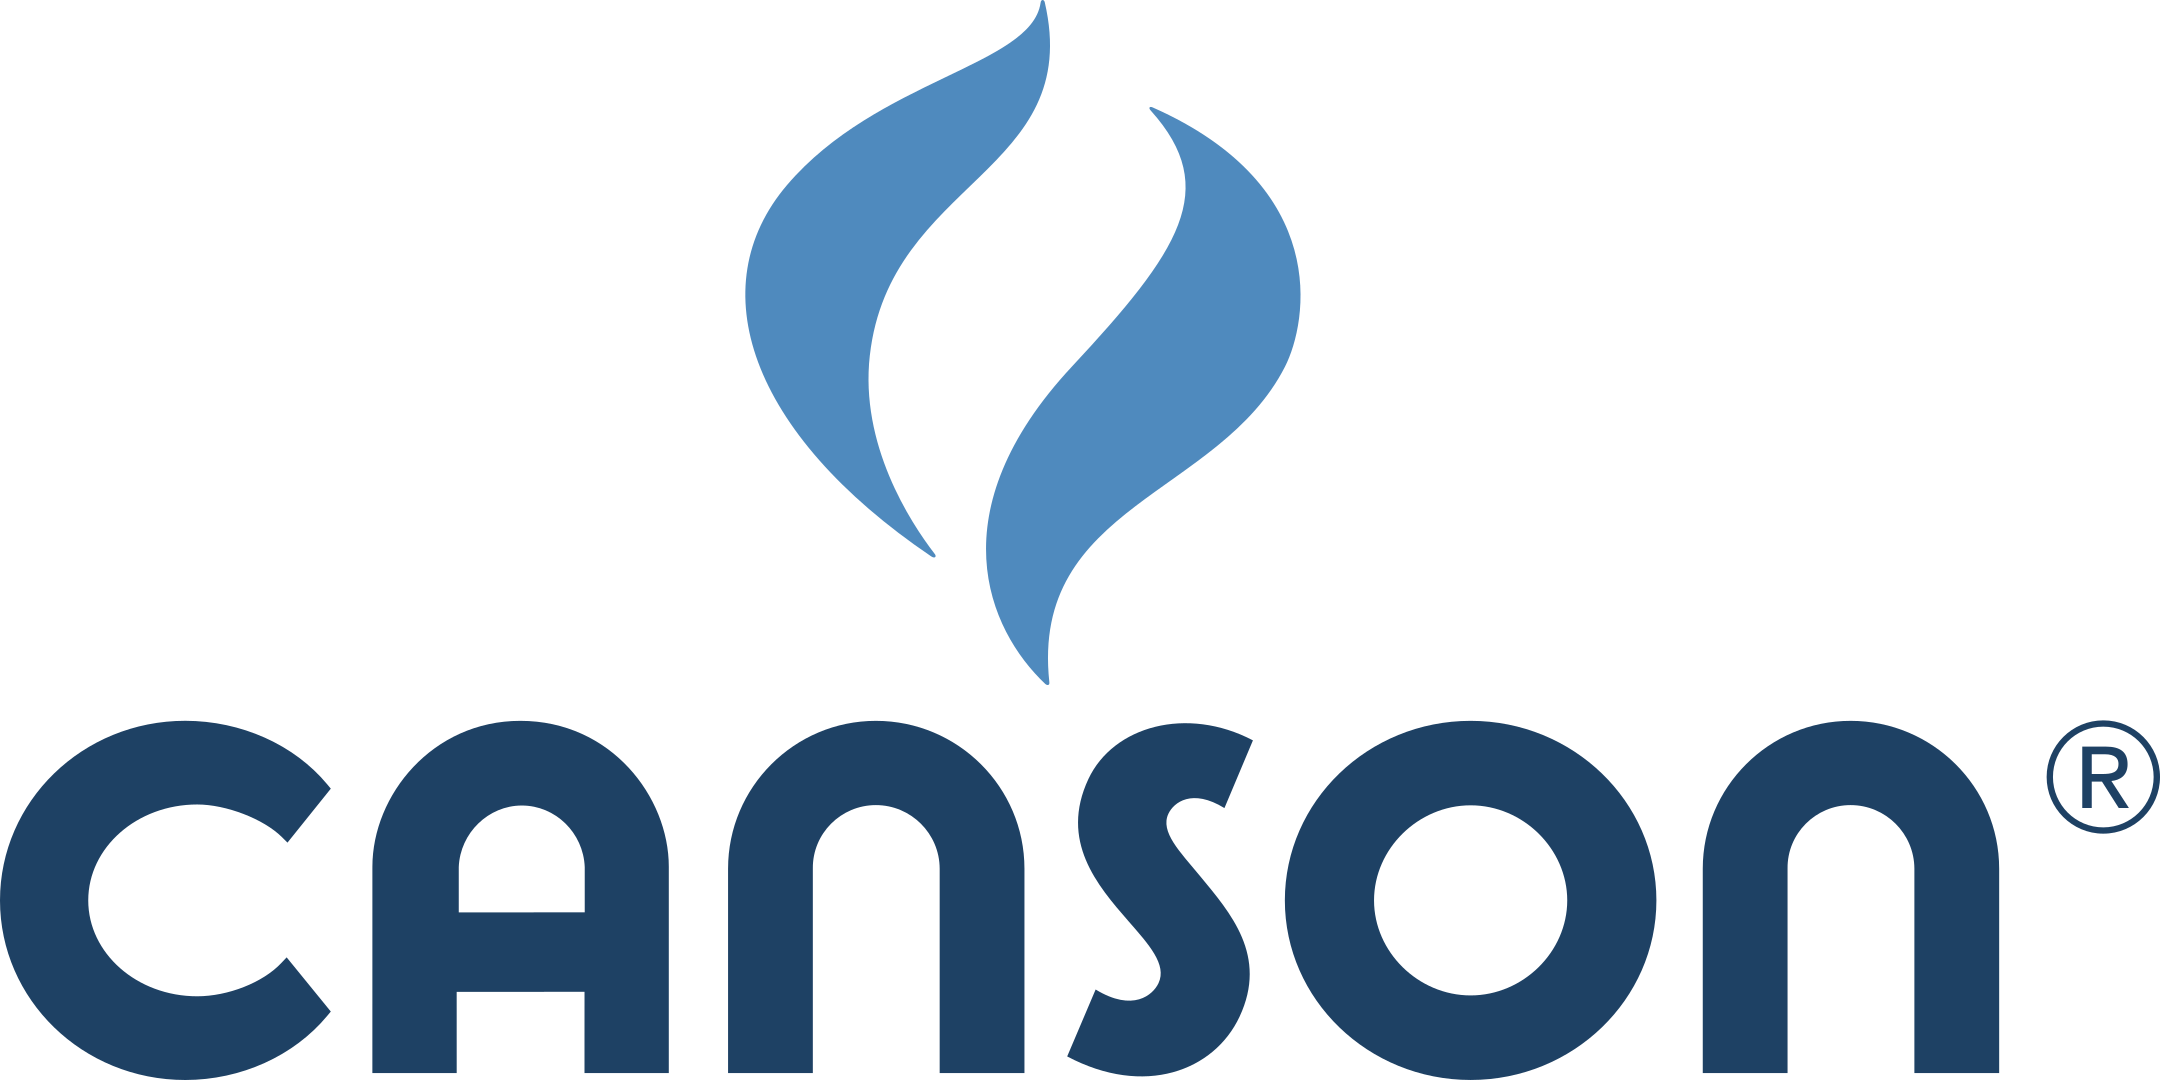 canson logo 1 - Canson Logo